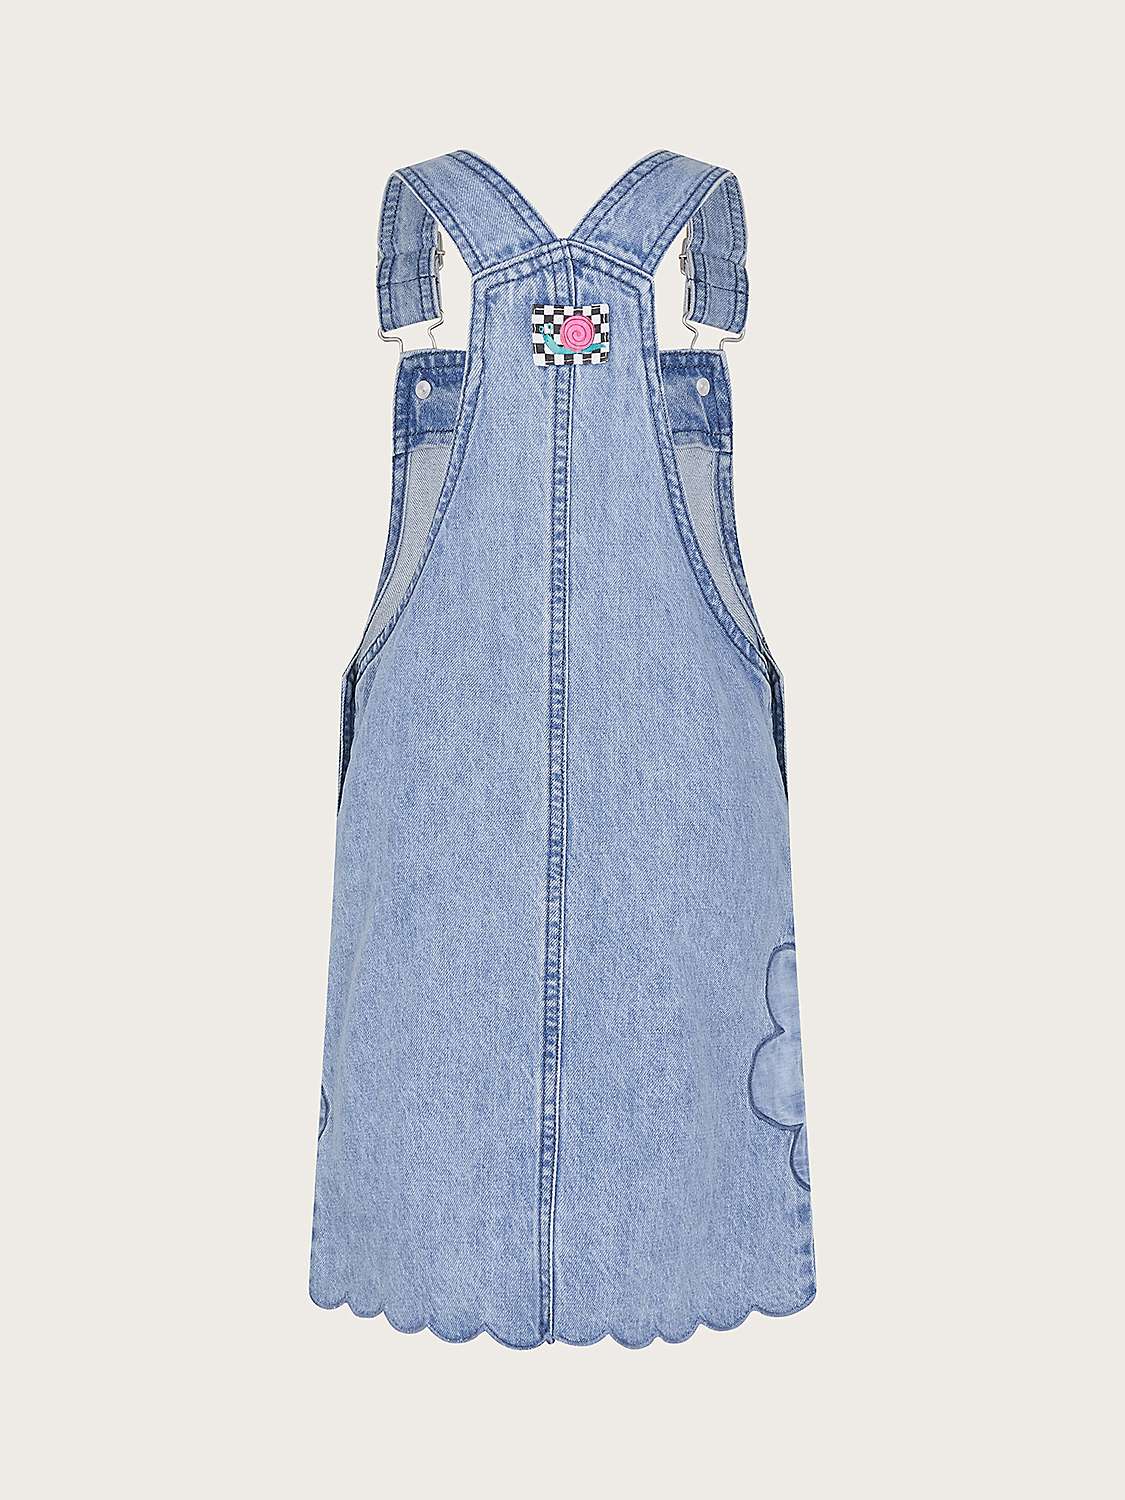 Buy Monsoon Kids' Floral Denim Pinafore Dress, Blue Online at johnlewis.com